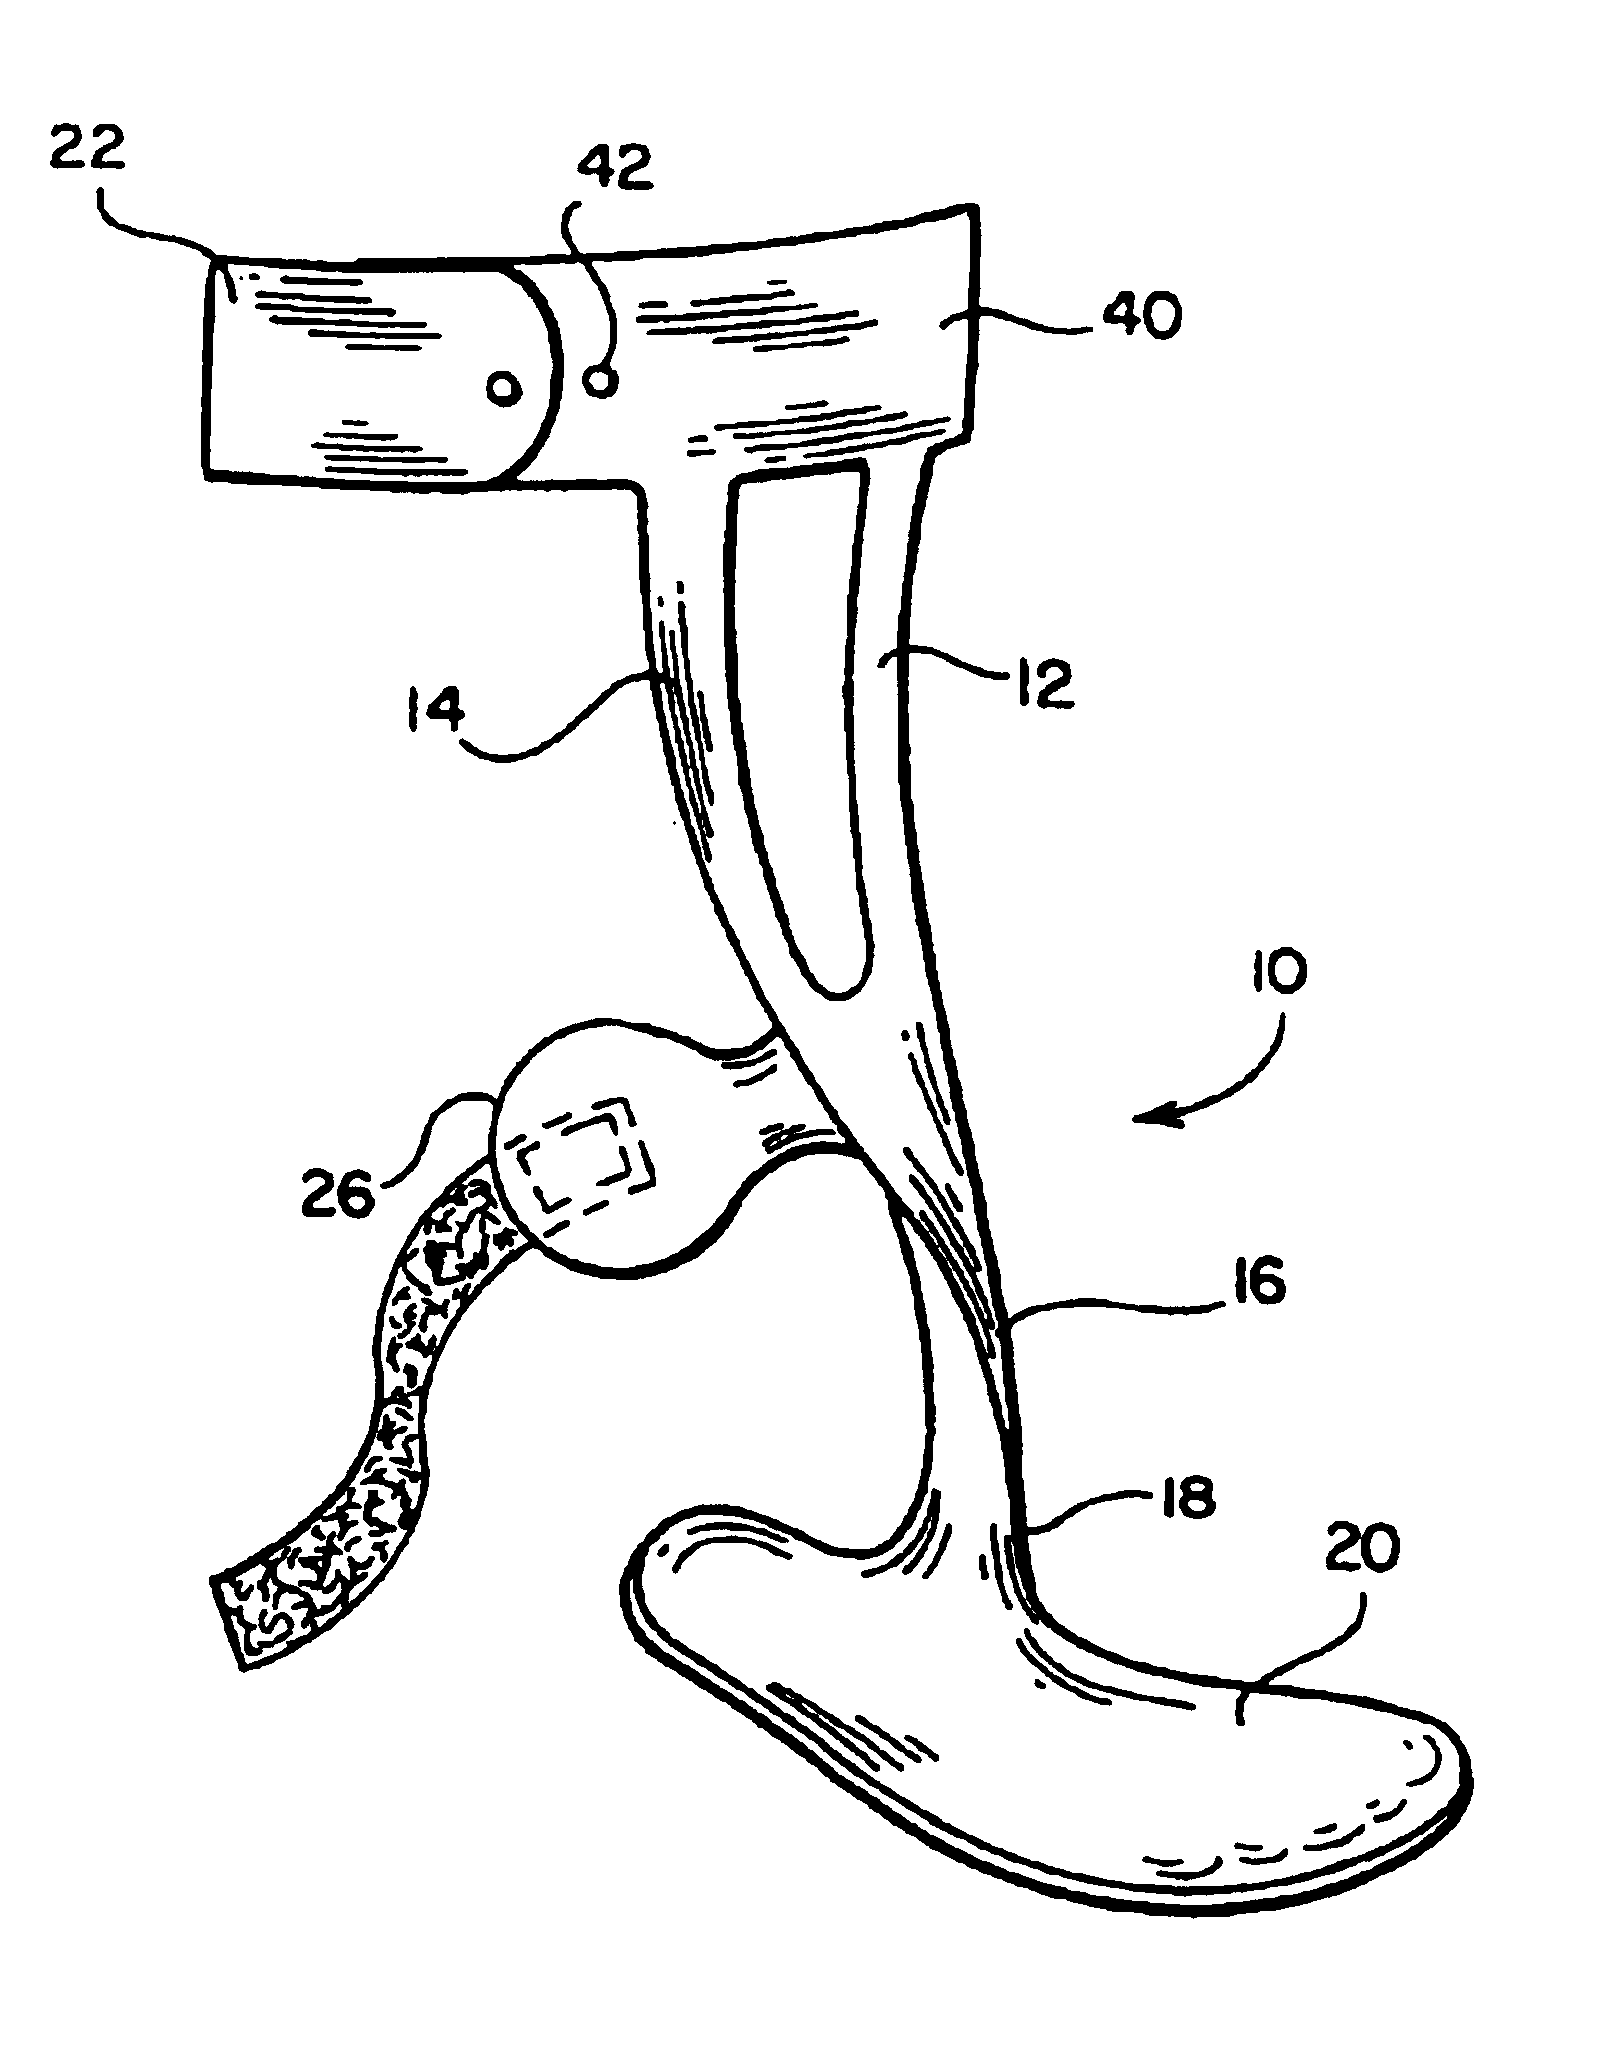 Ankle-foot orthosis